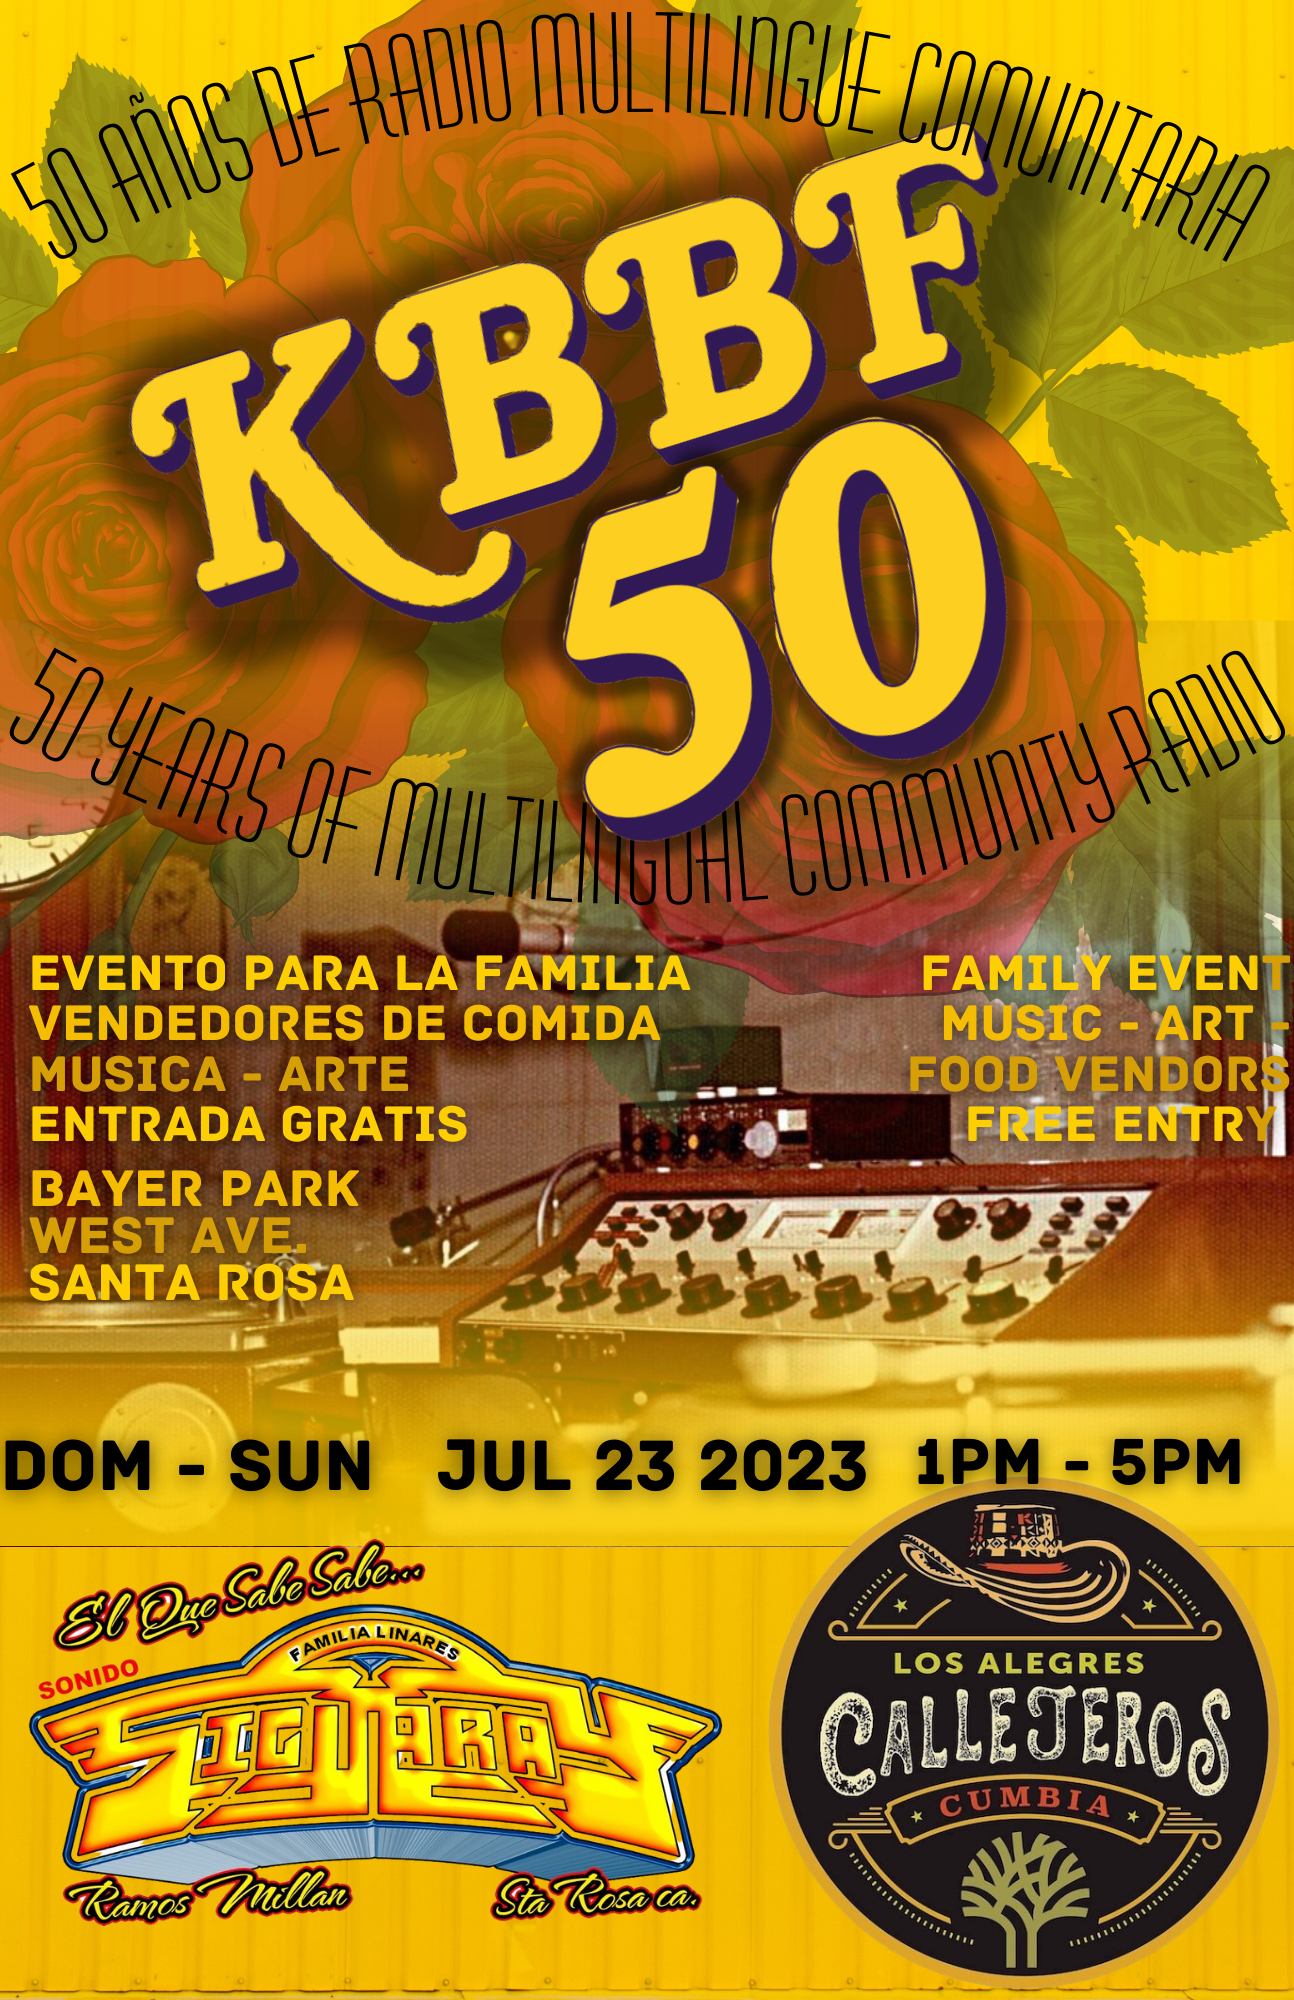 Radio KBBF 50th Anniversary Celebration, July 3, 2023 